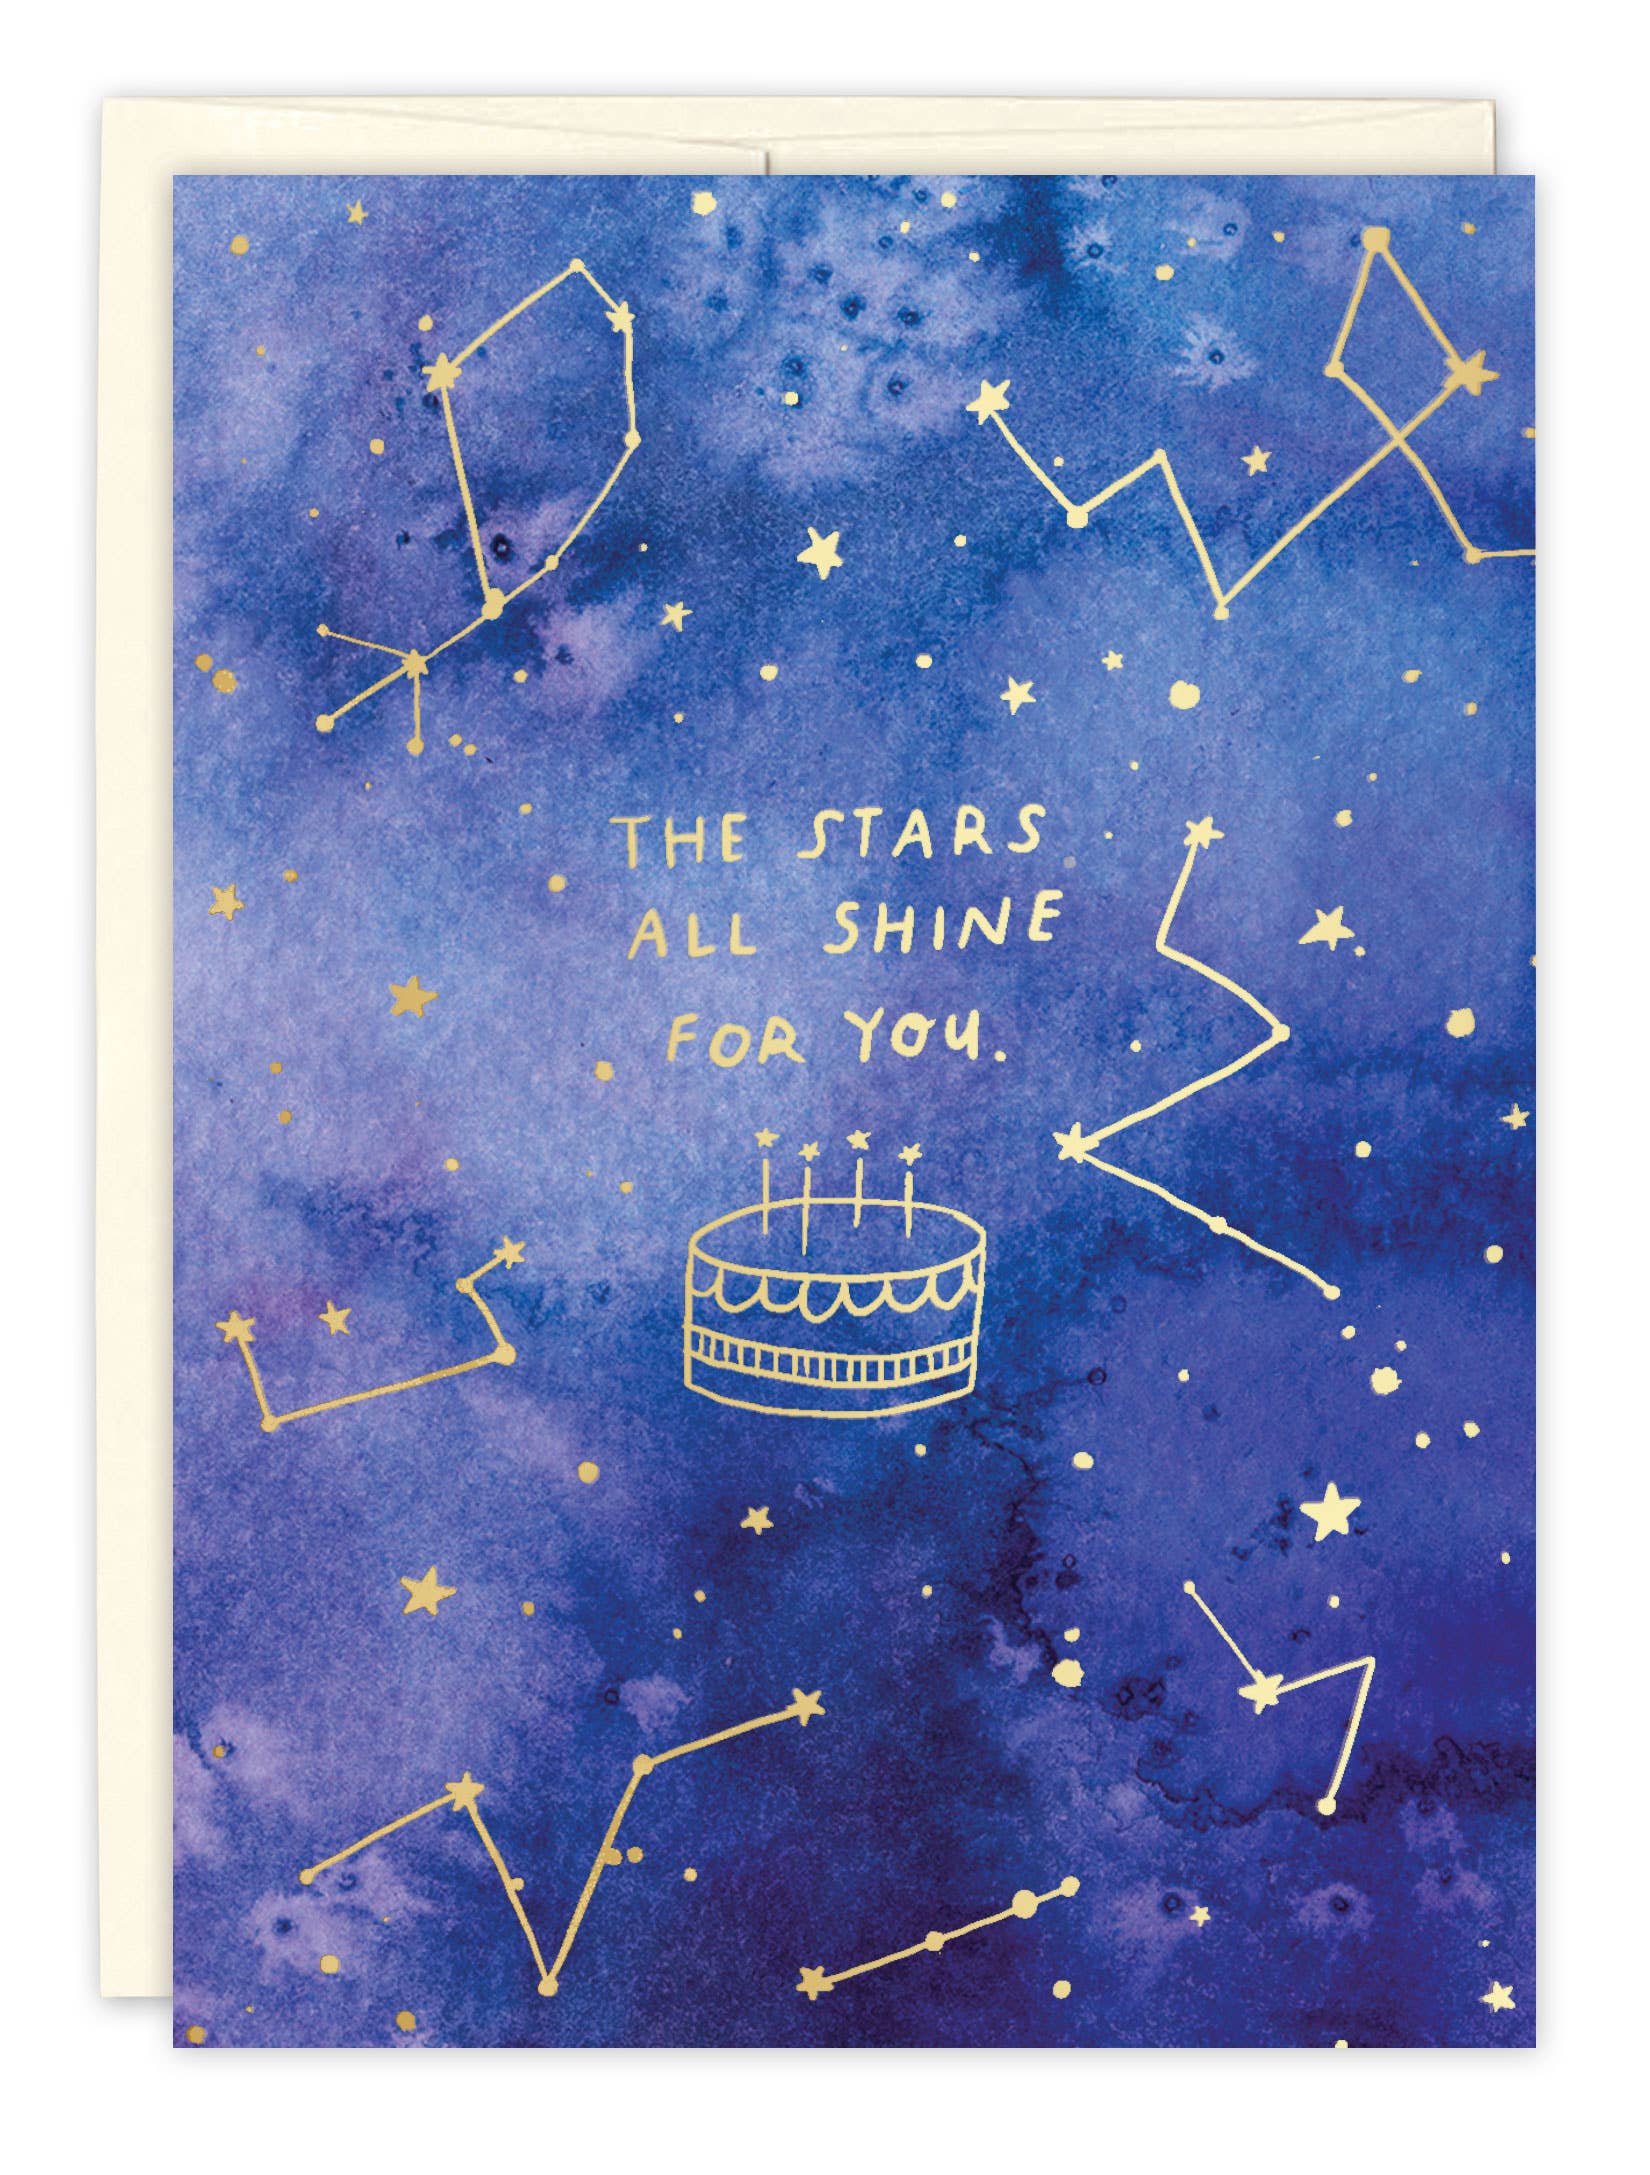 Biely & Shoaf - Stars Shine For You Birthday Card